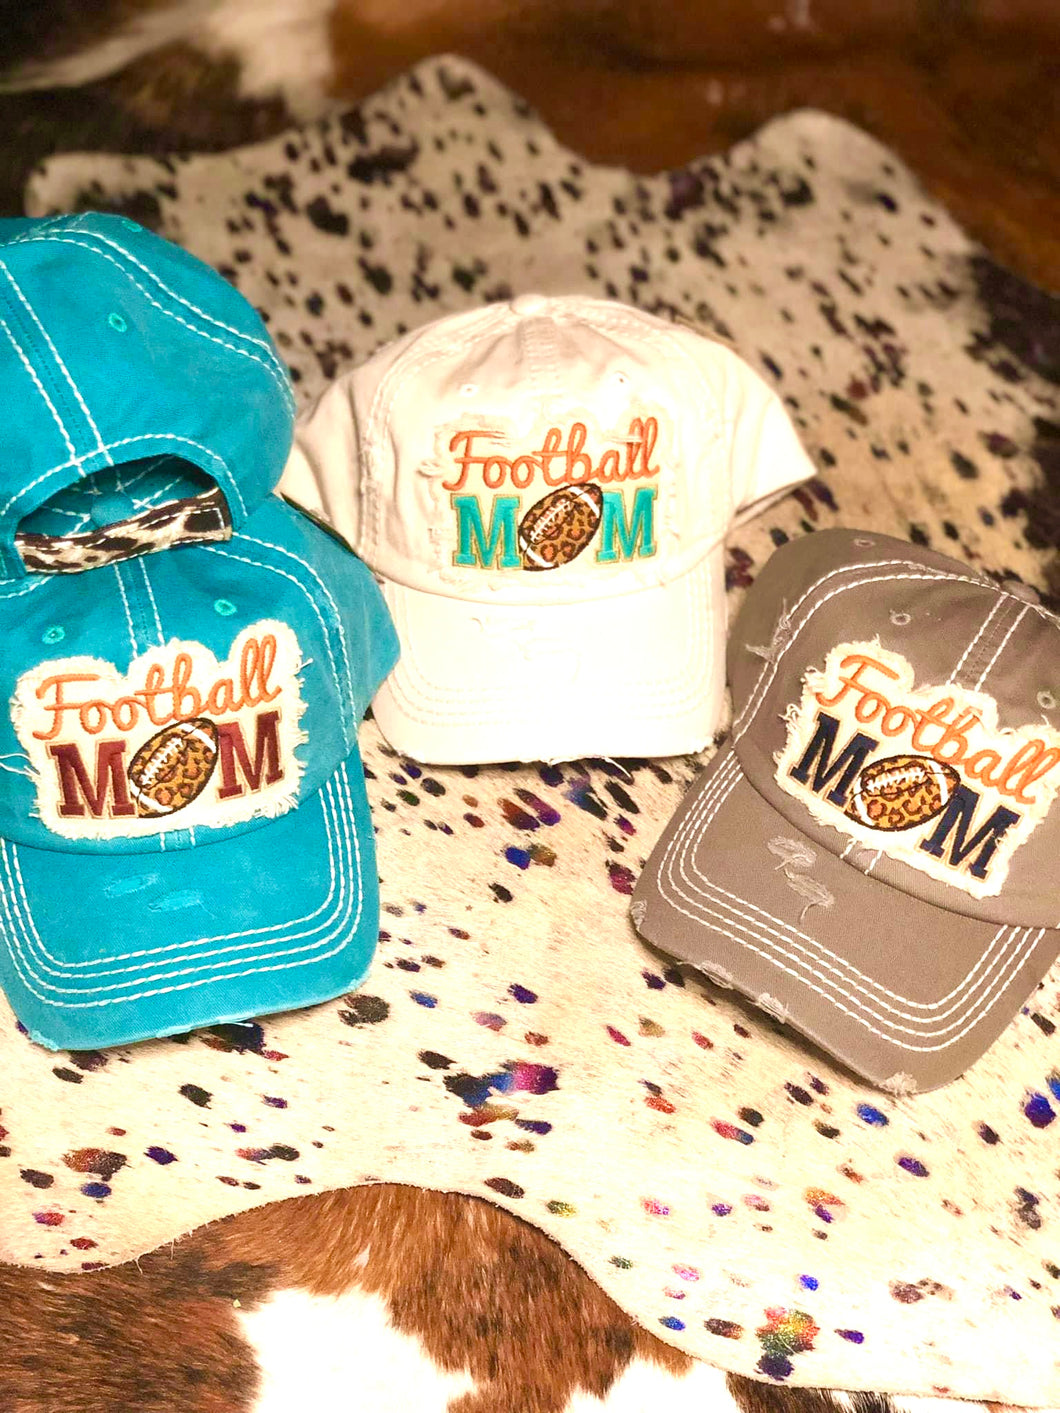 Football Mom Hat